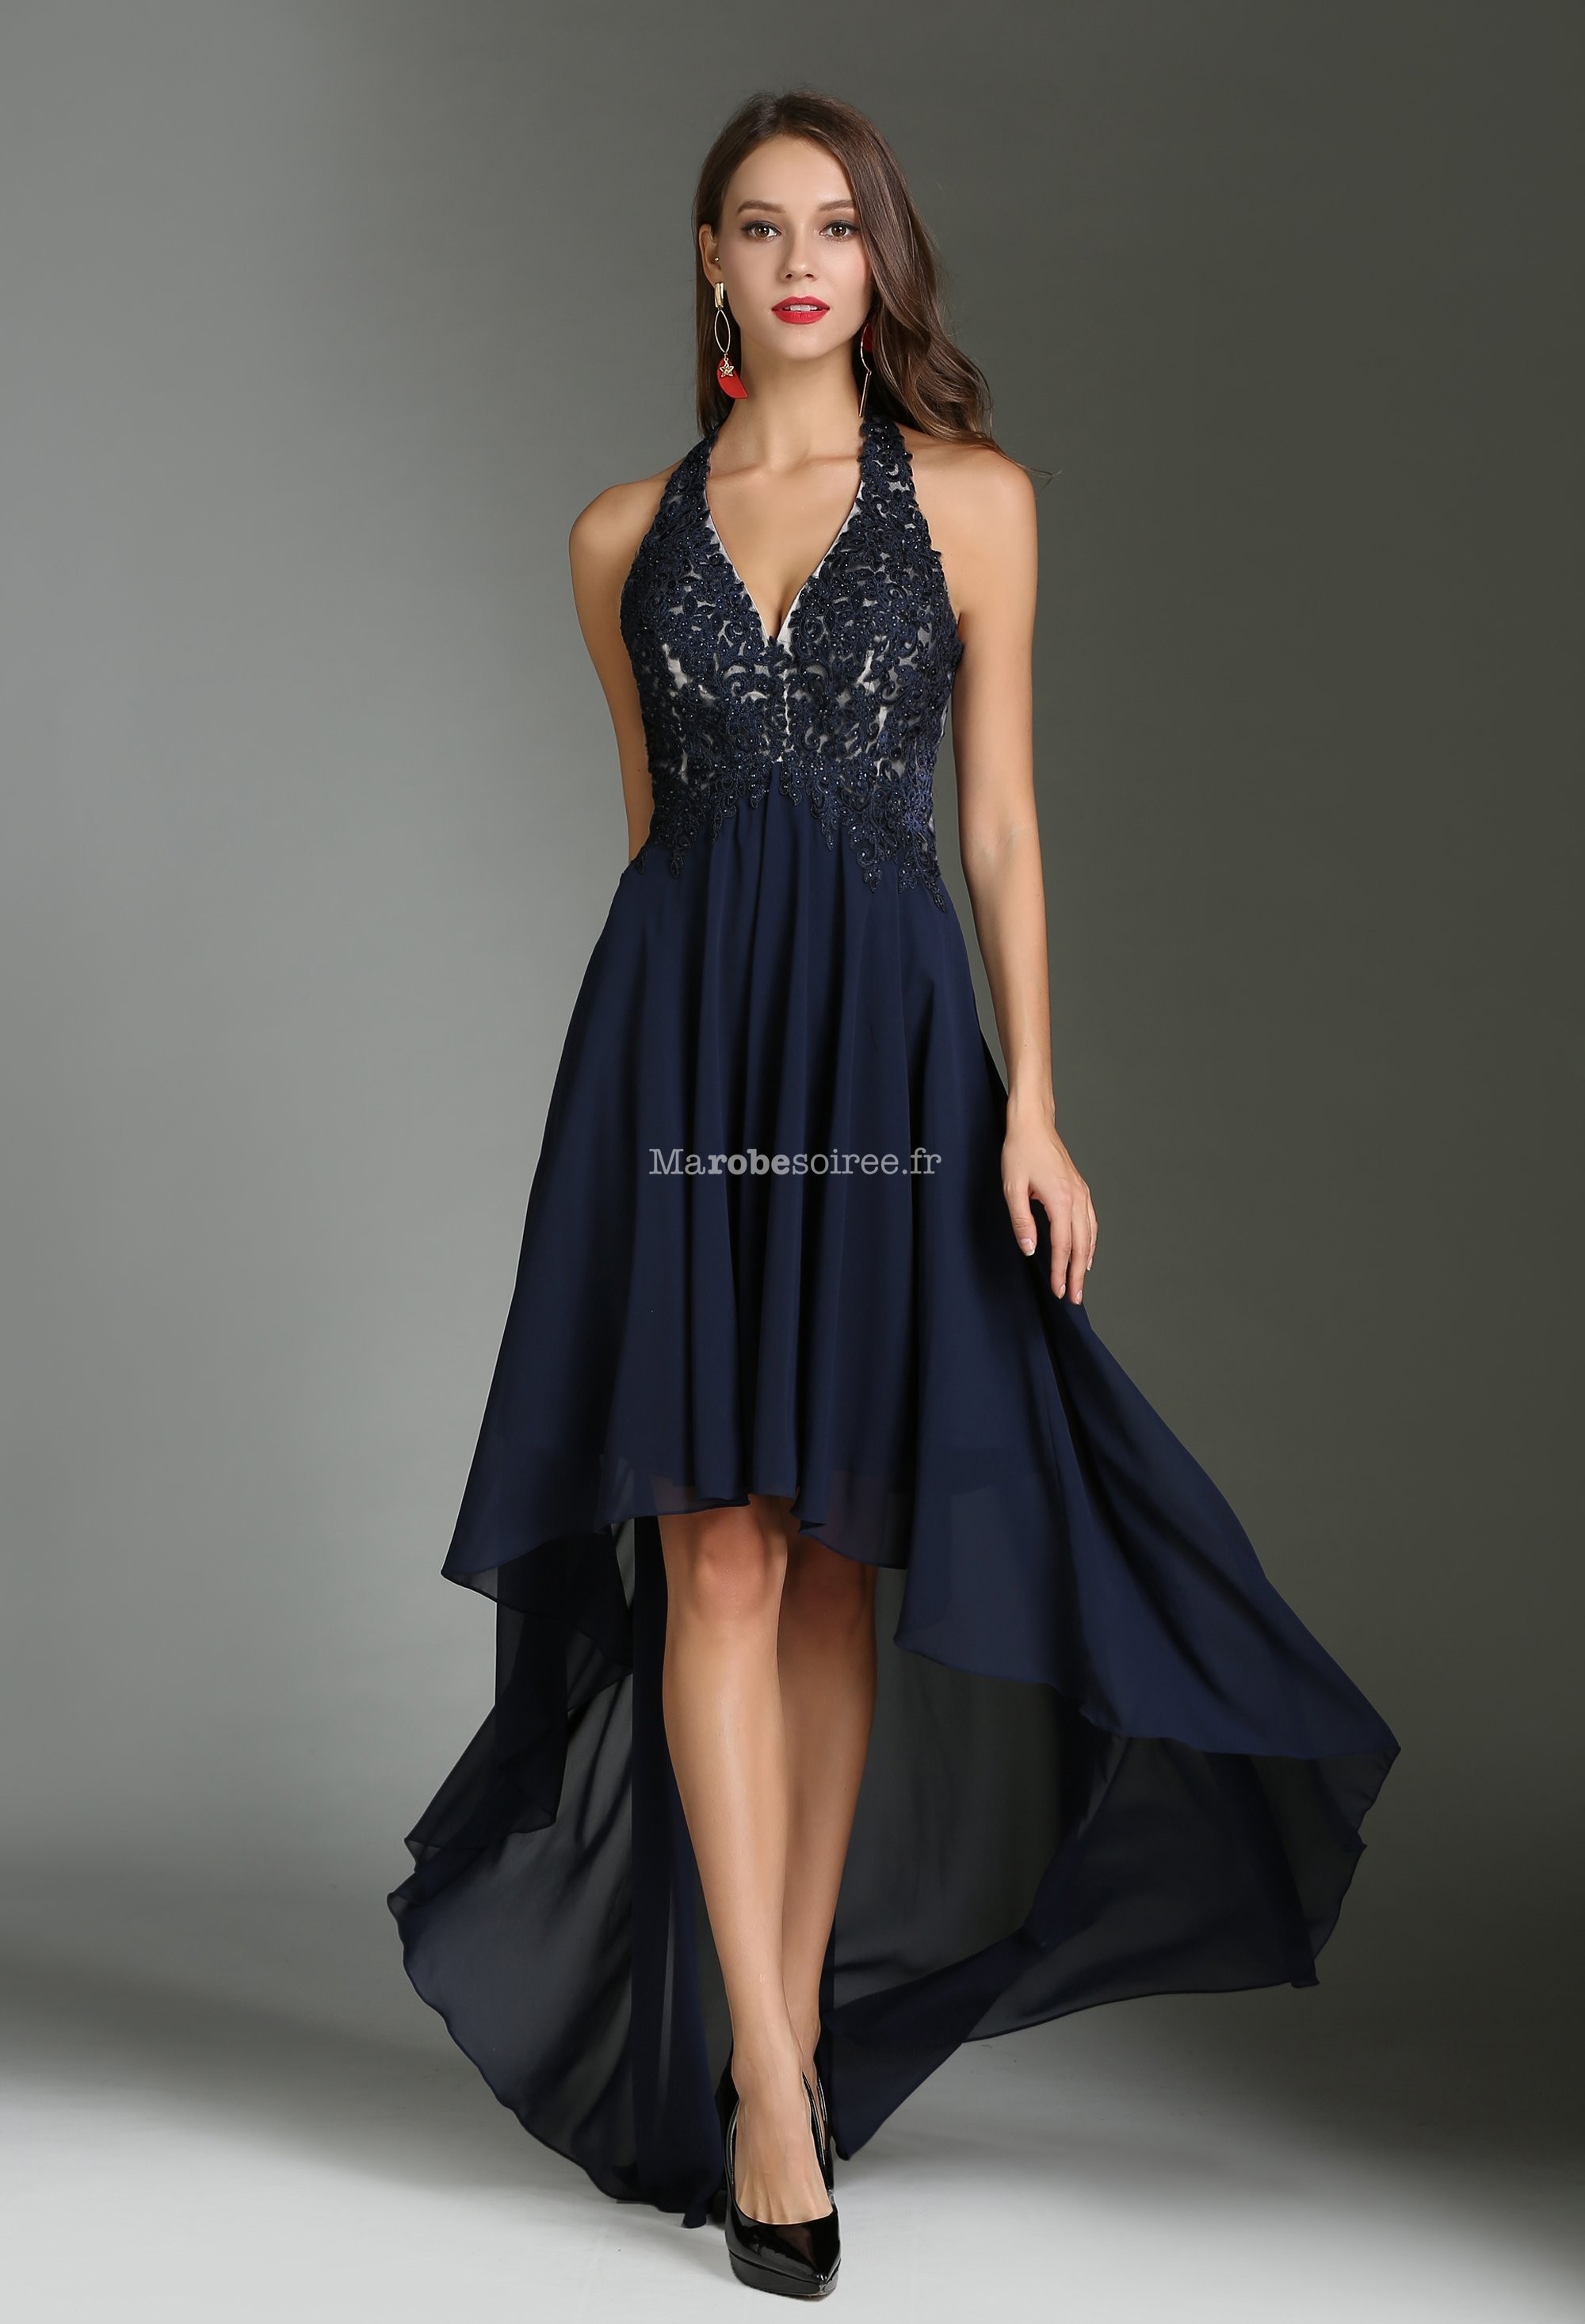 robe bleu nuit